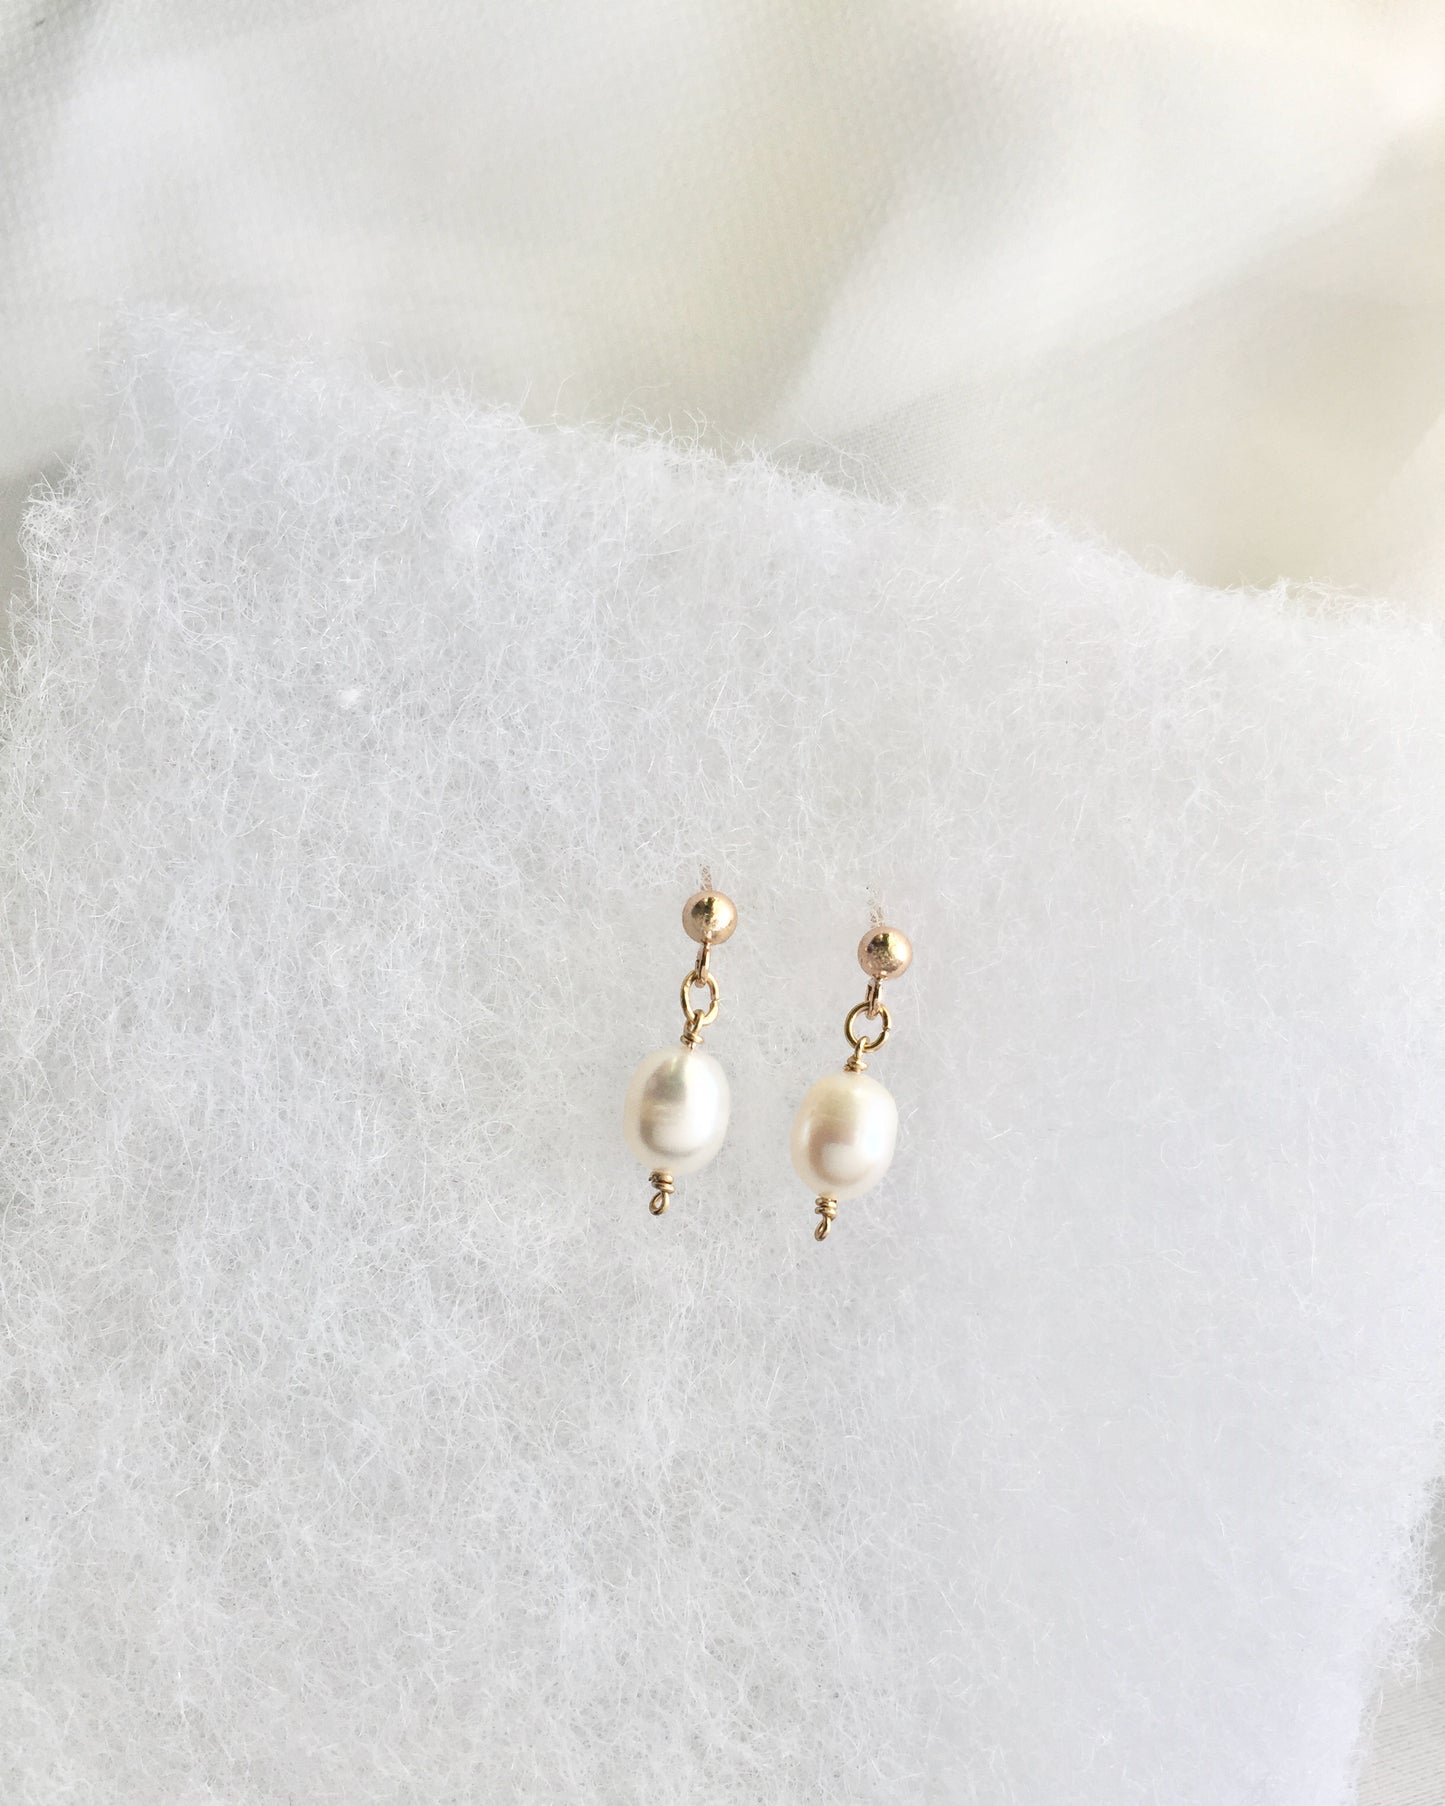 Minimalist Pearl Earrings | Simple Pearl Drop Earrings In Gold Filled or Sterling Silver | IB Jewelry